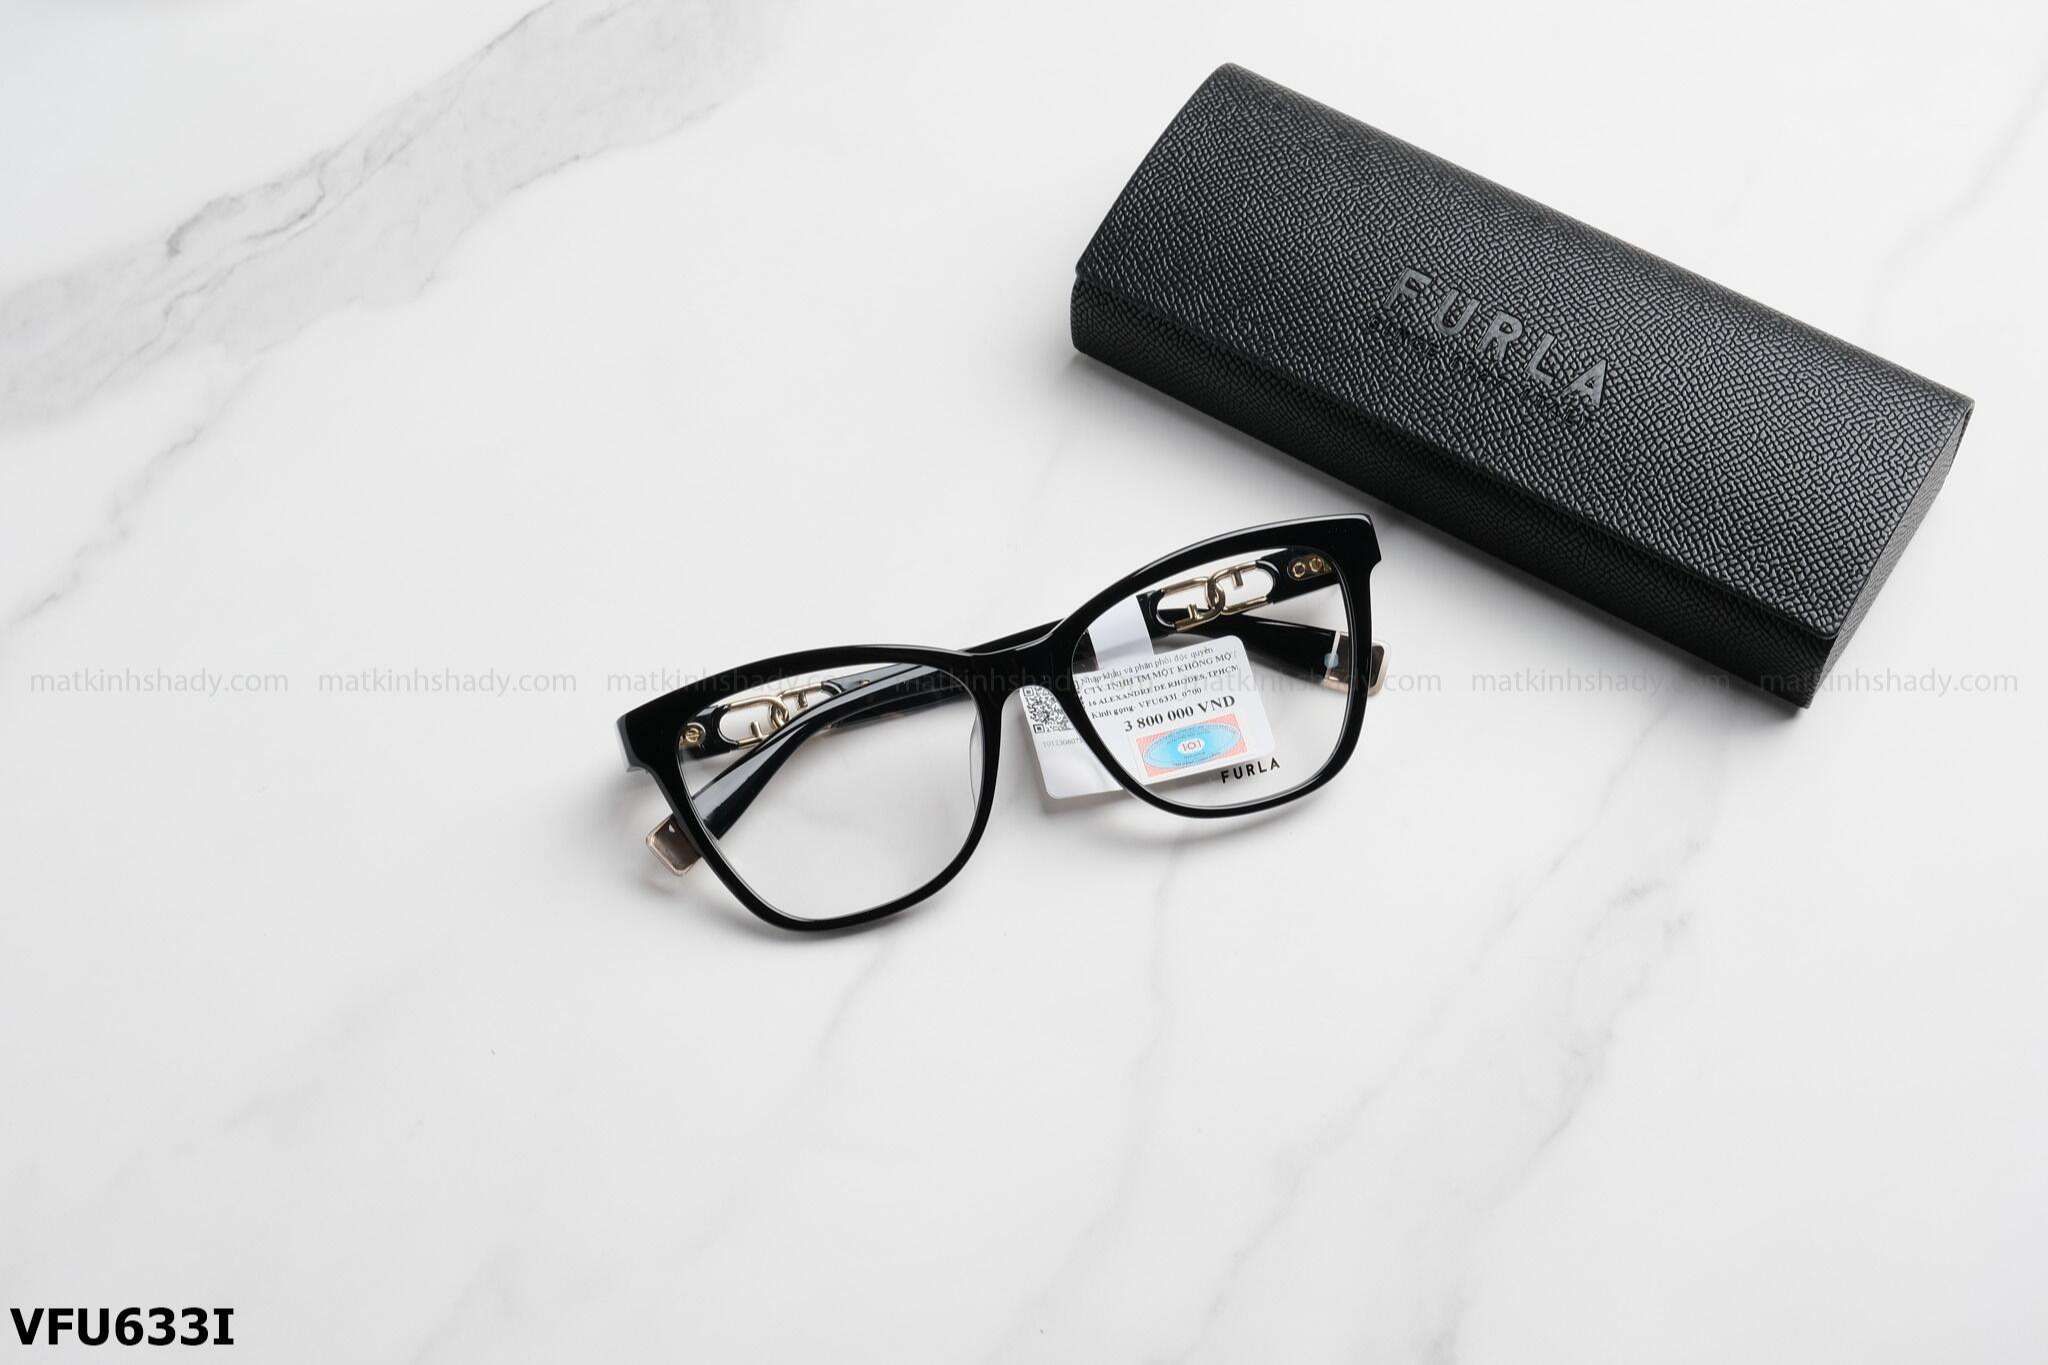  Furla Eyewear - Glasses - VFU633I 